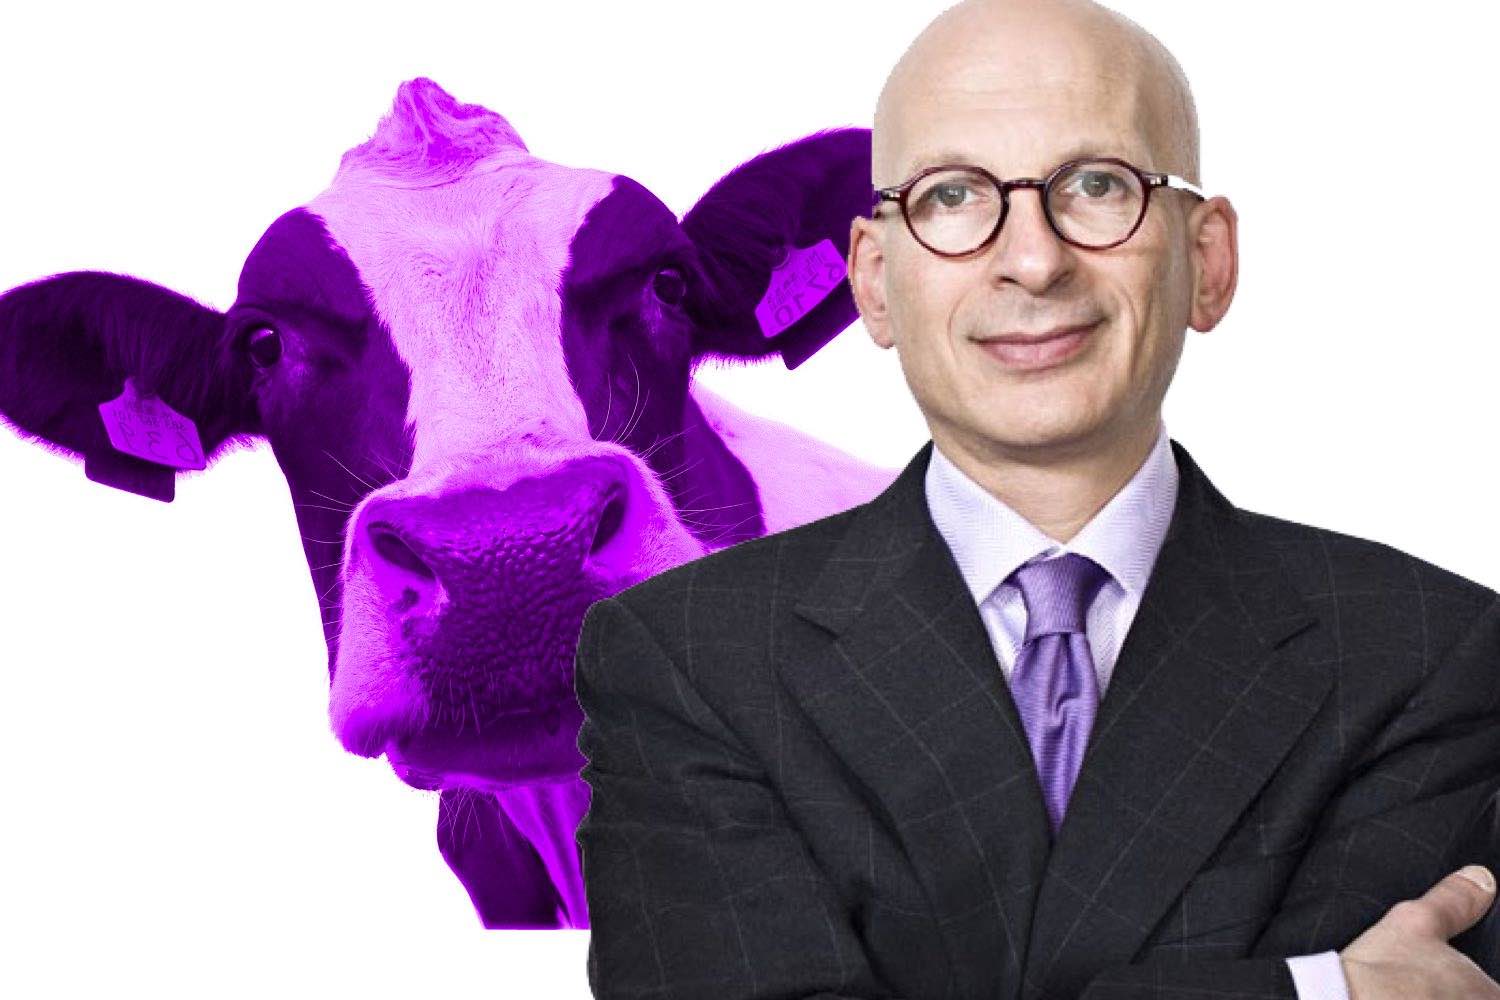 Resumen del libro La vaca púrpura de Seth Godin - Leader